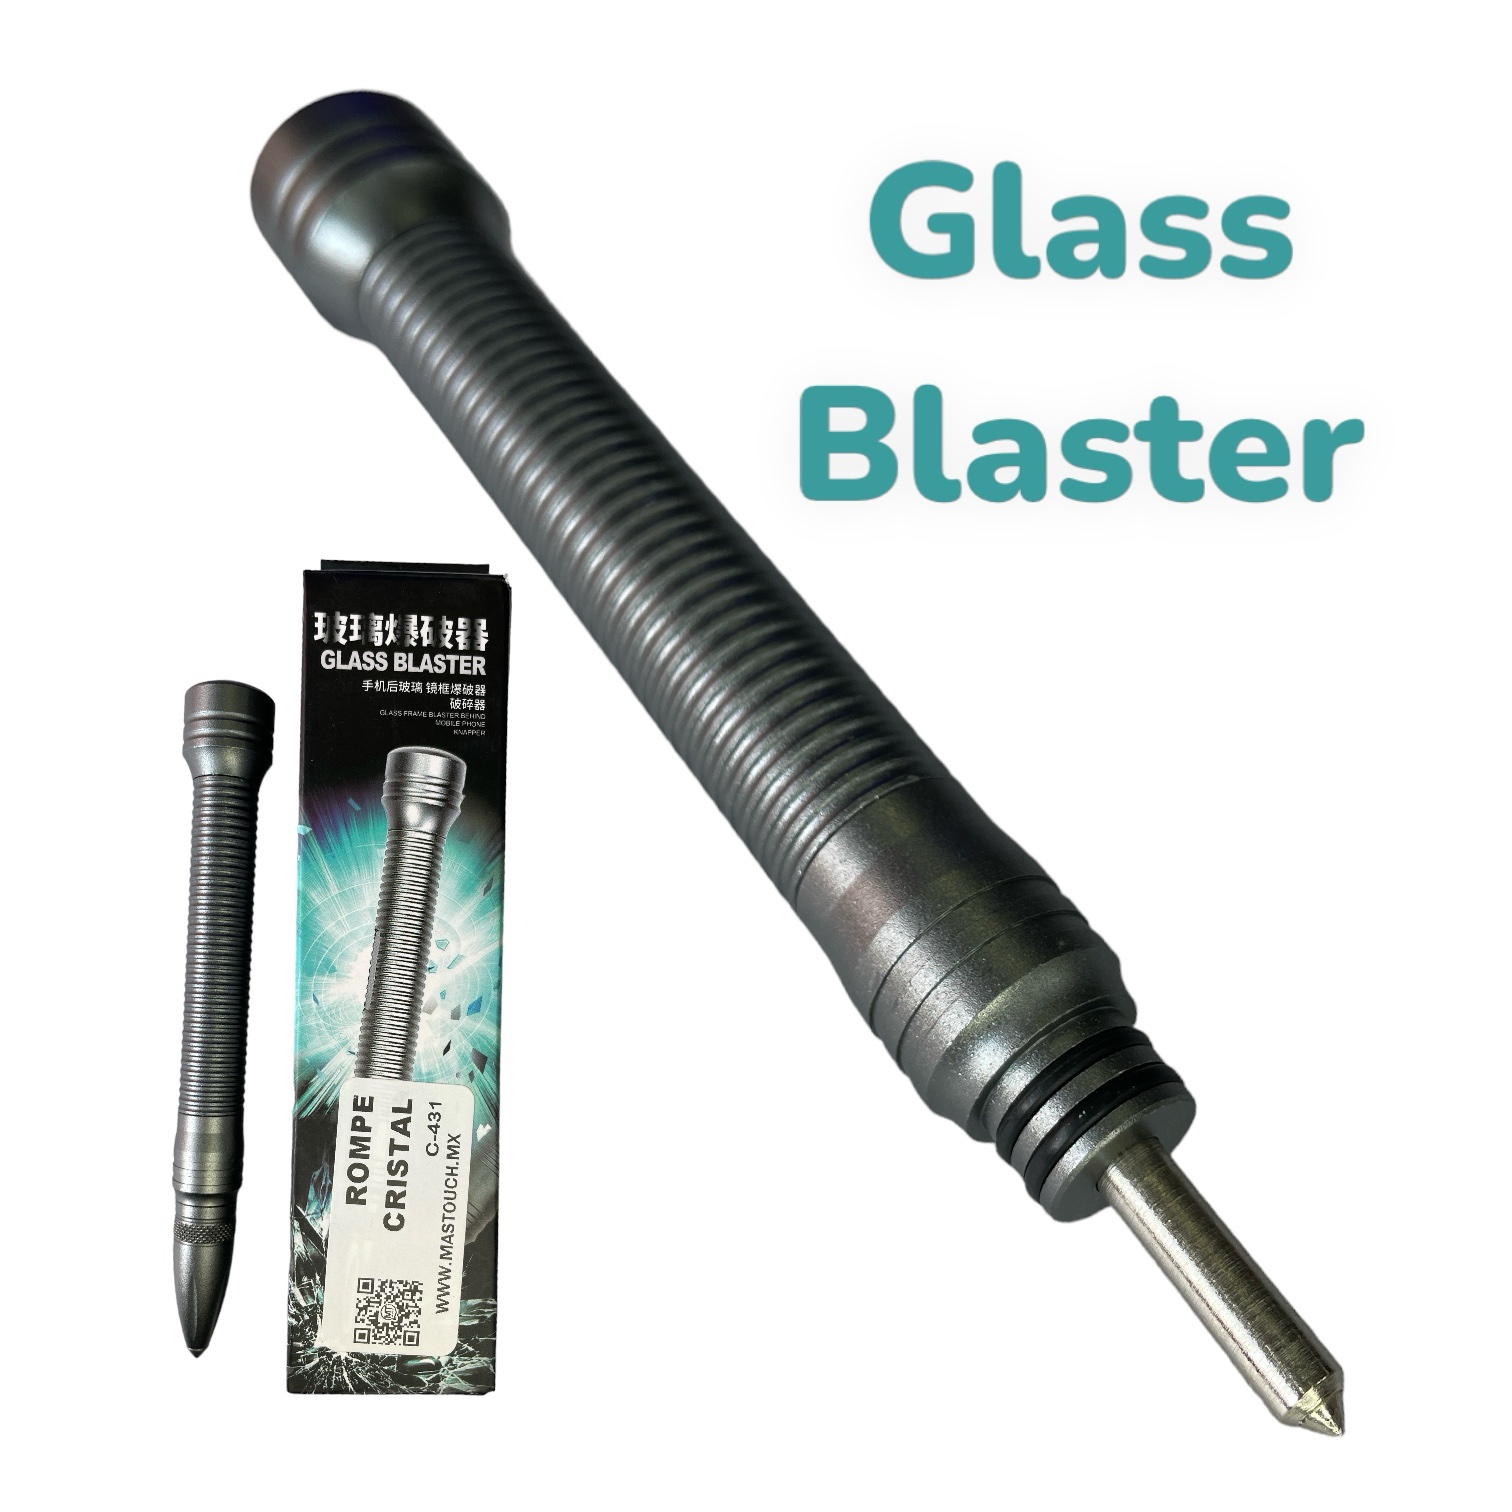 Glass Blaster